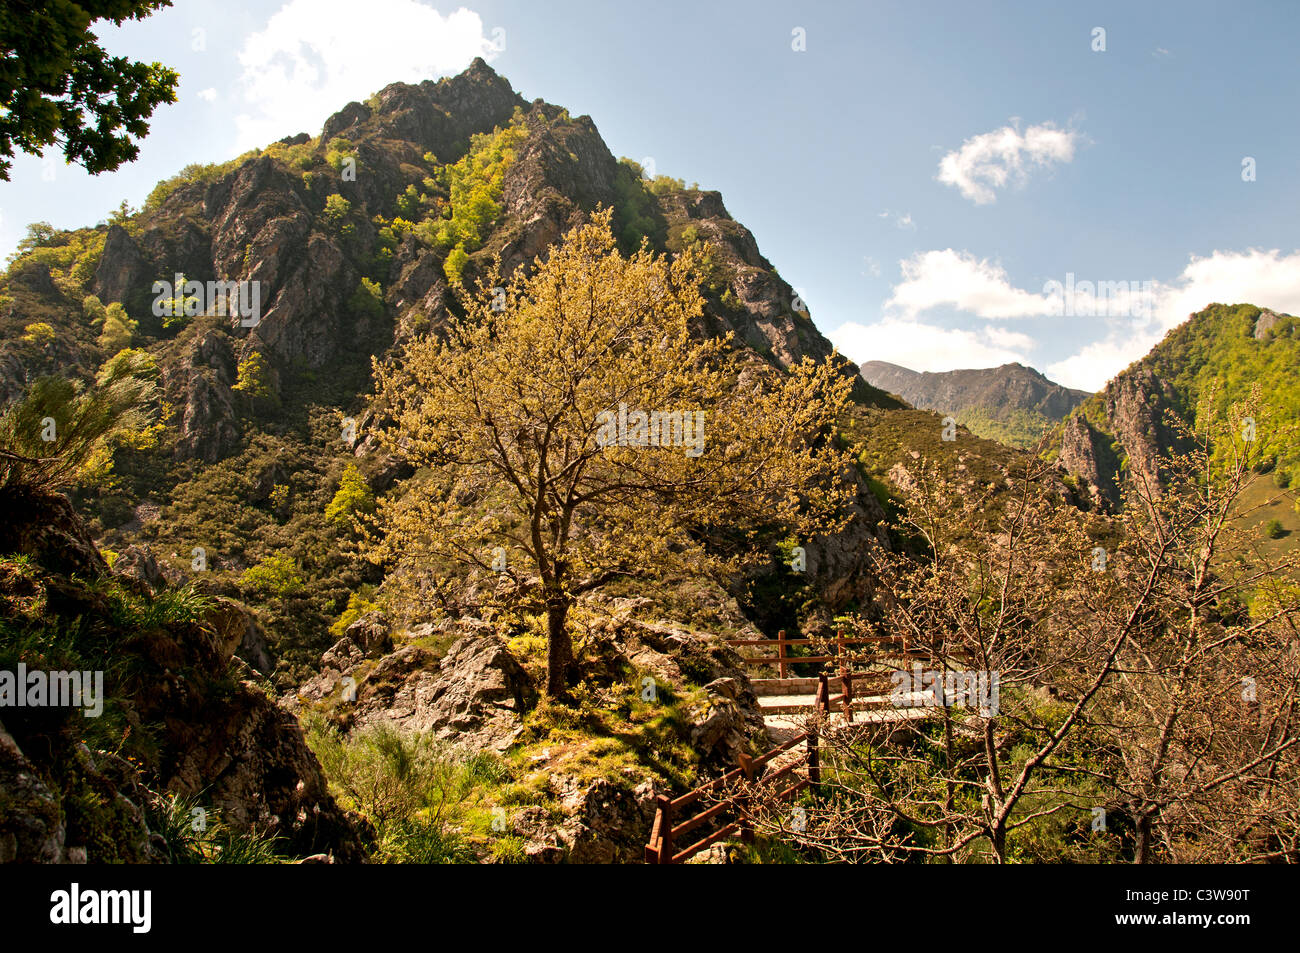 The Picos de Europa northern coast of Spain Cantabrian Mountains Stock Photo